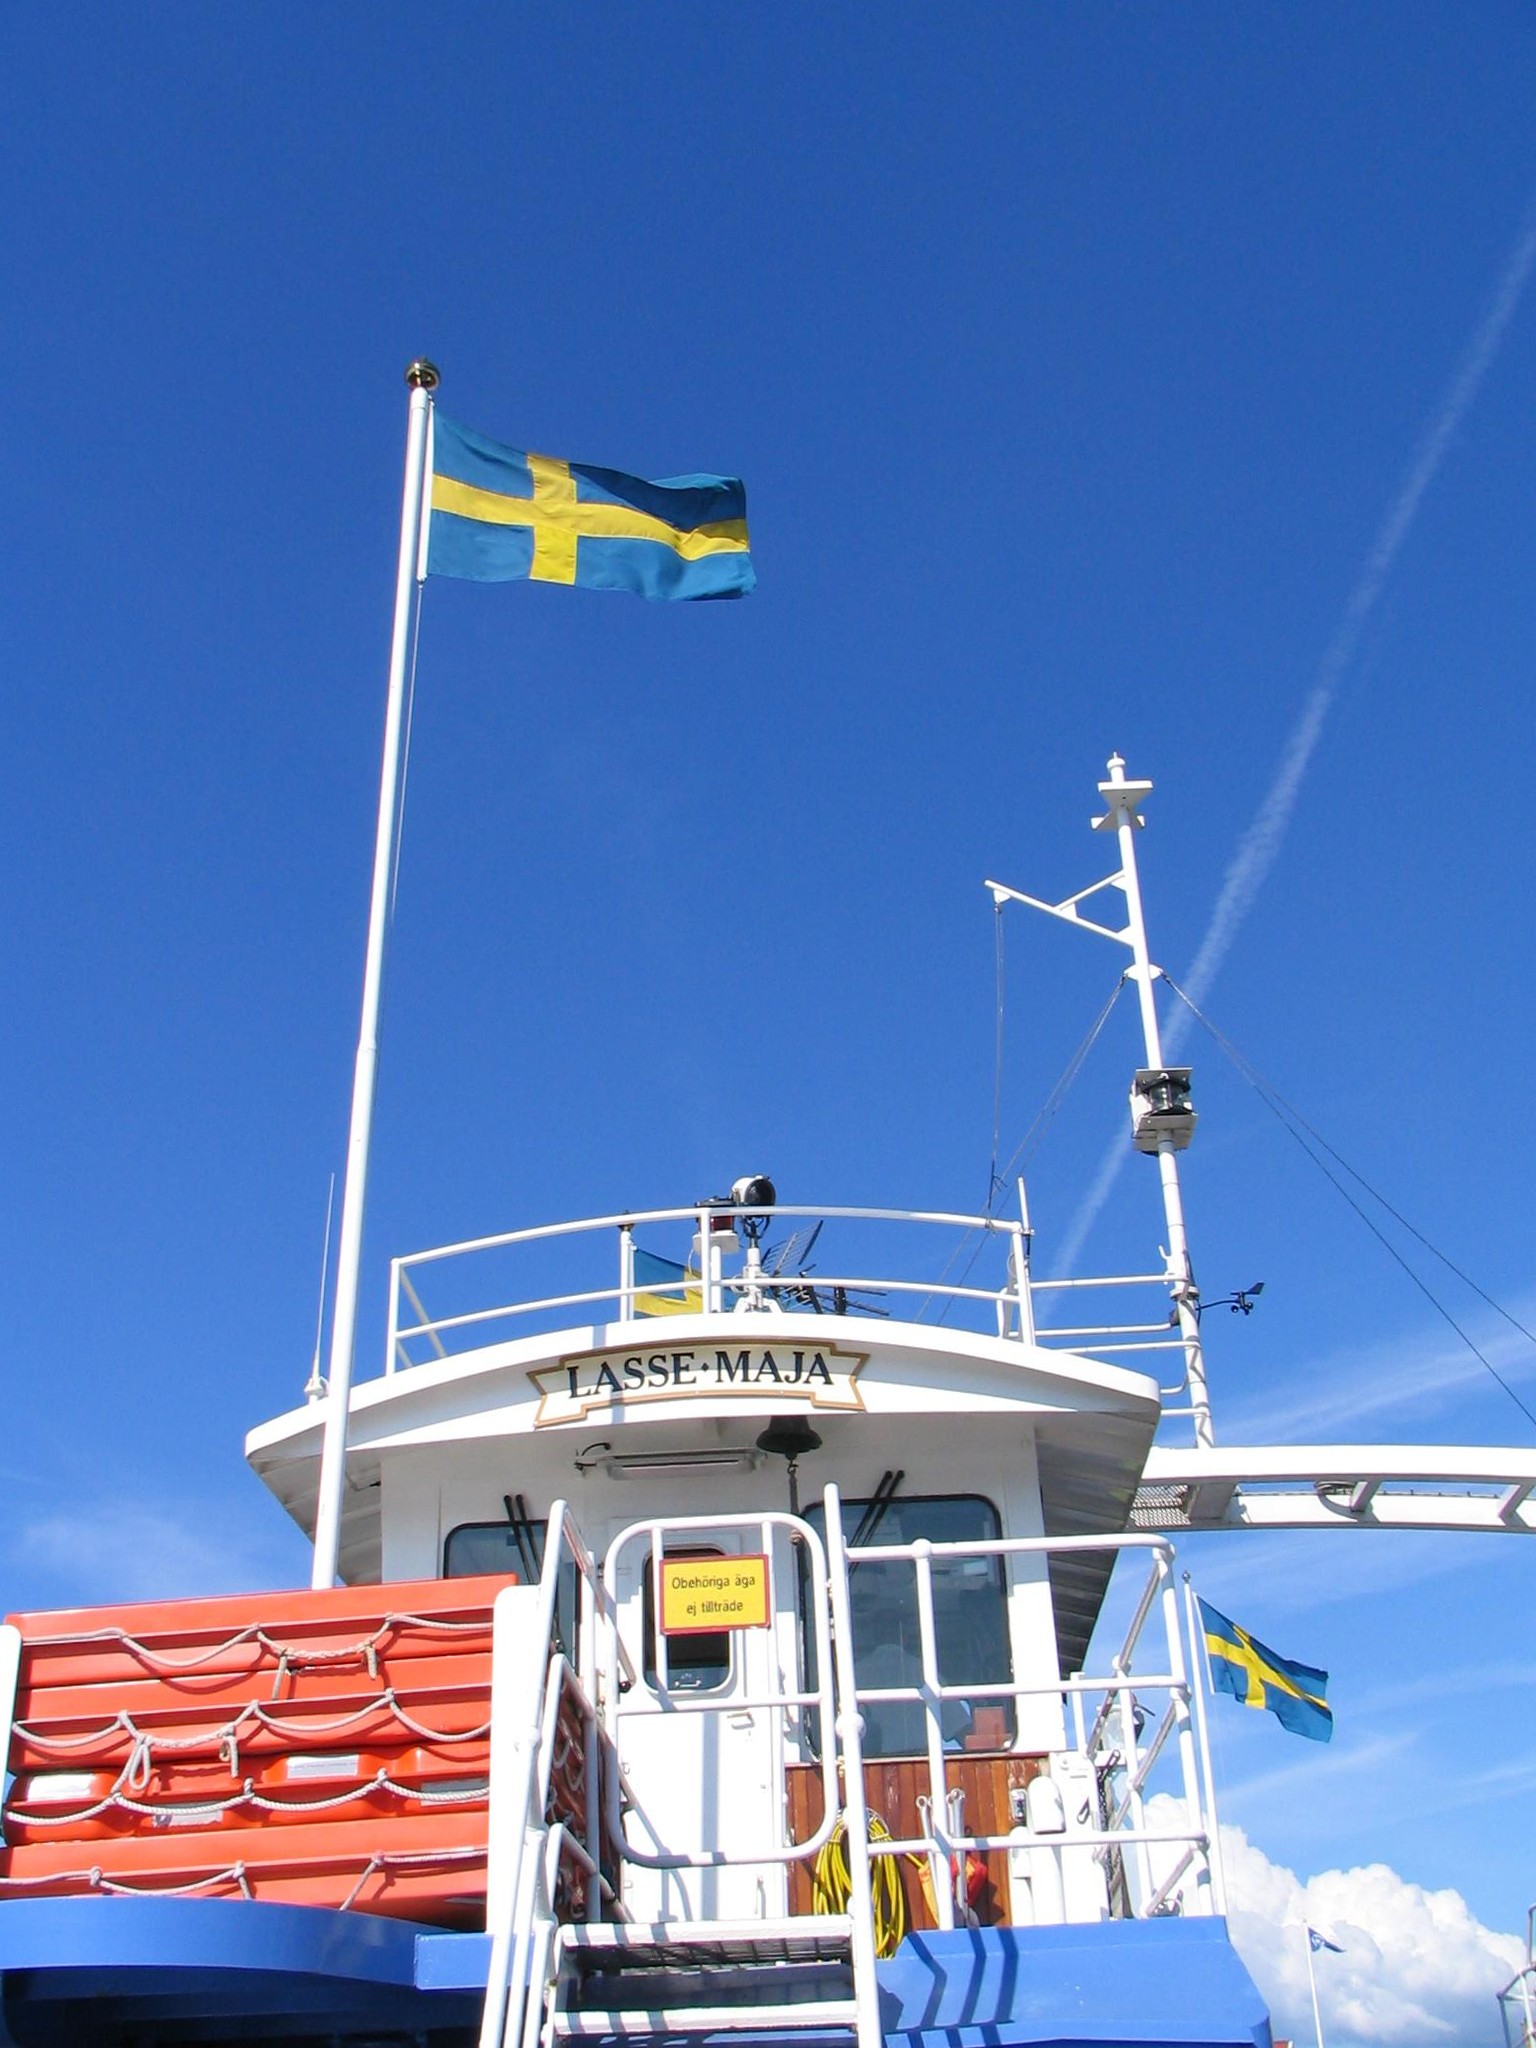 The ferry 'Lasse-Maja'